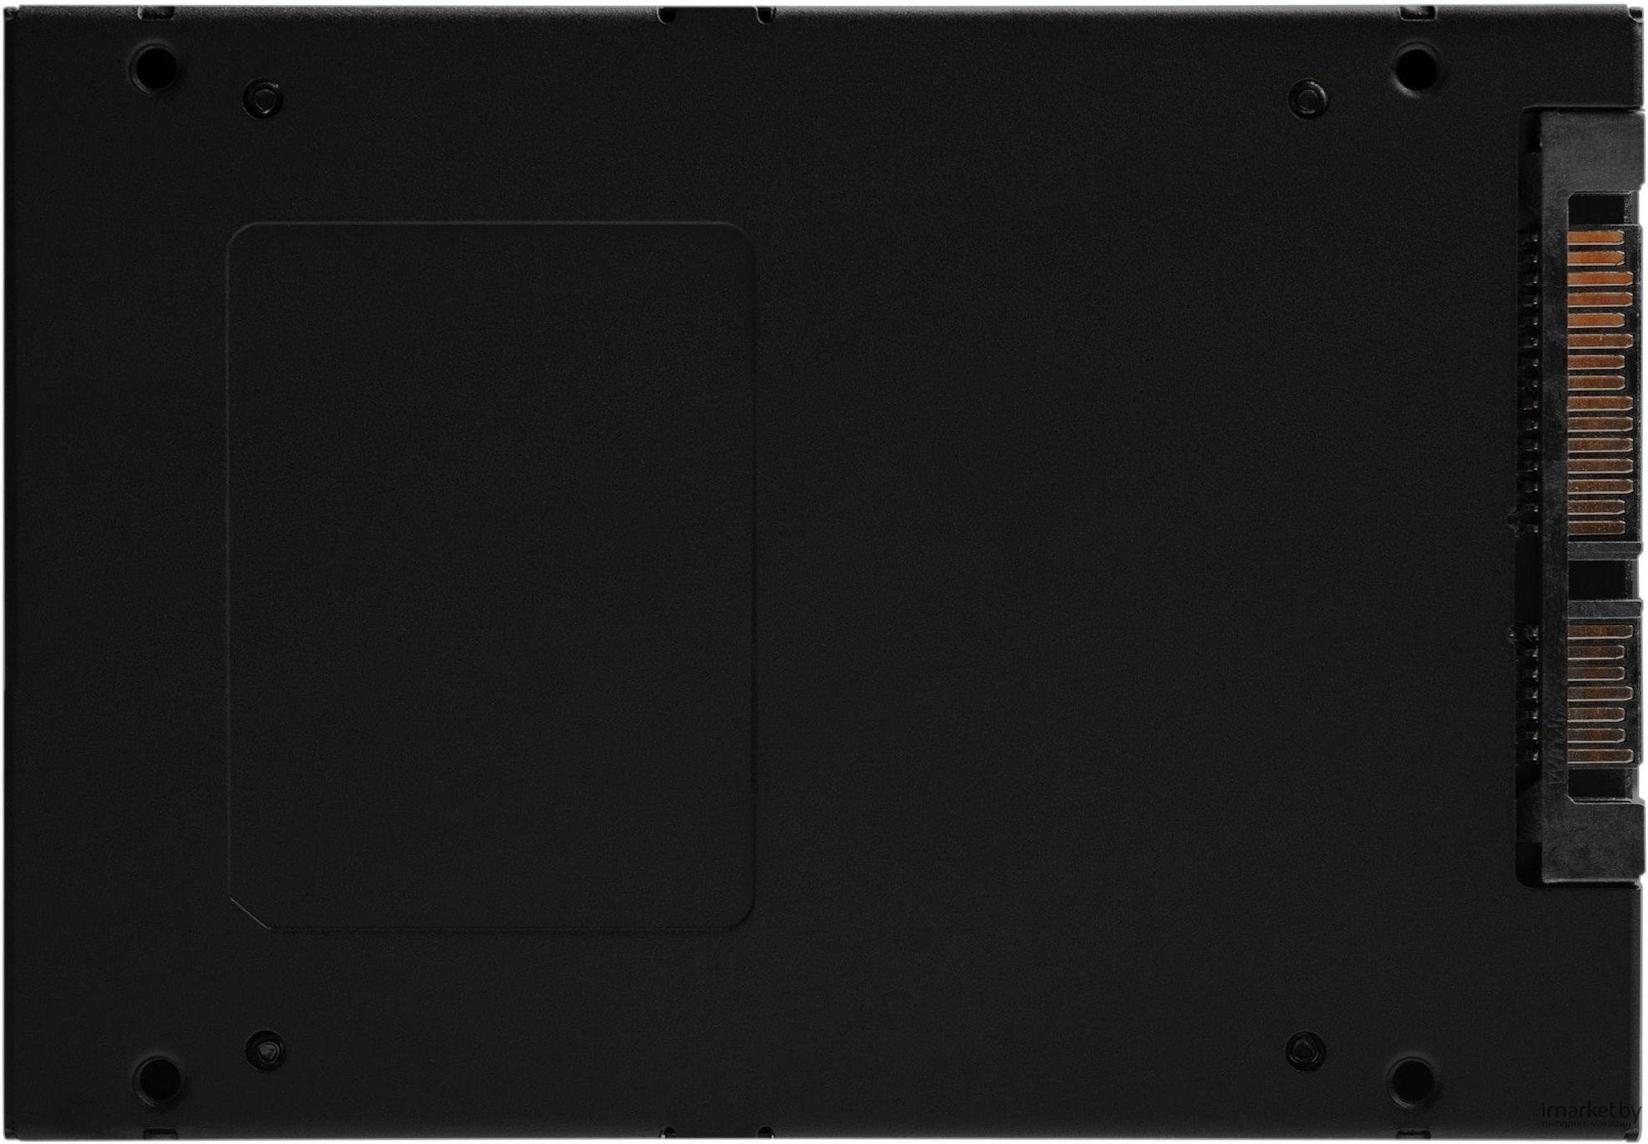 Selected image for Kingston KC600 SSD, 1024 GB, 2,5", SATA3